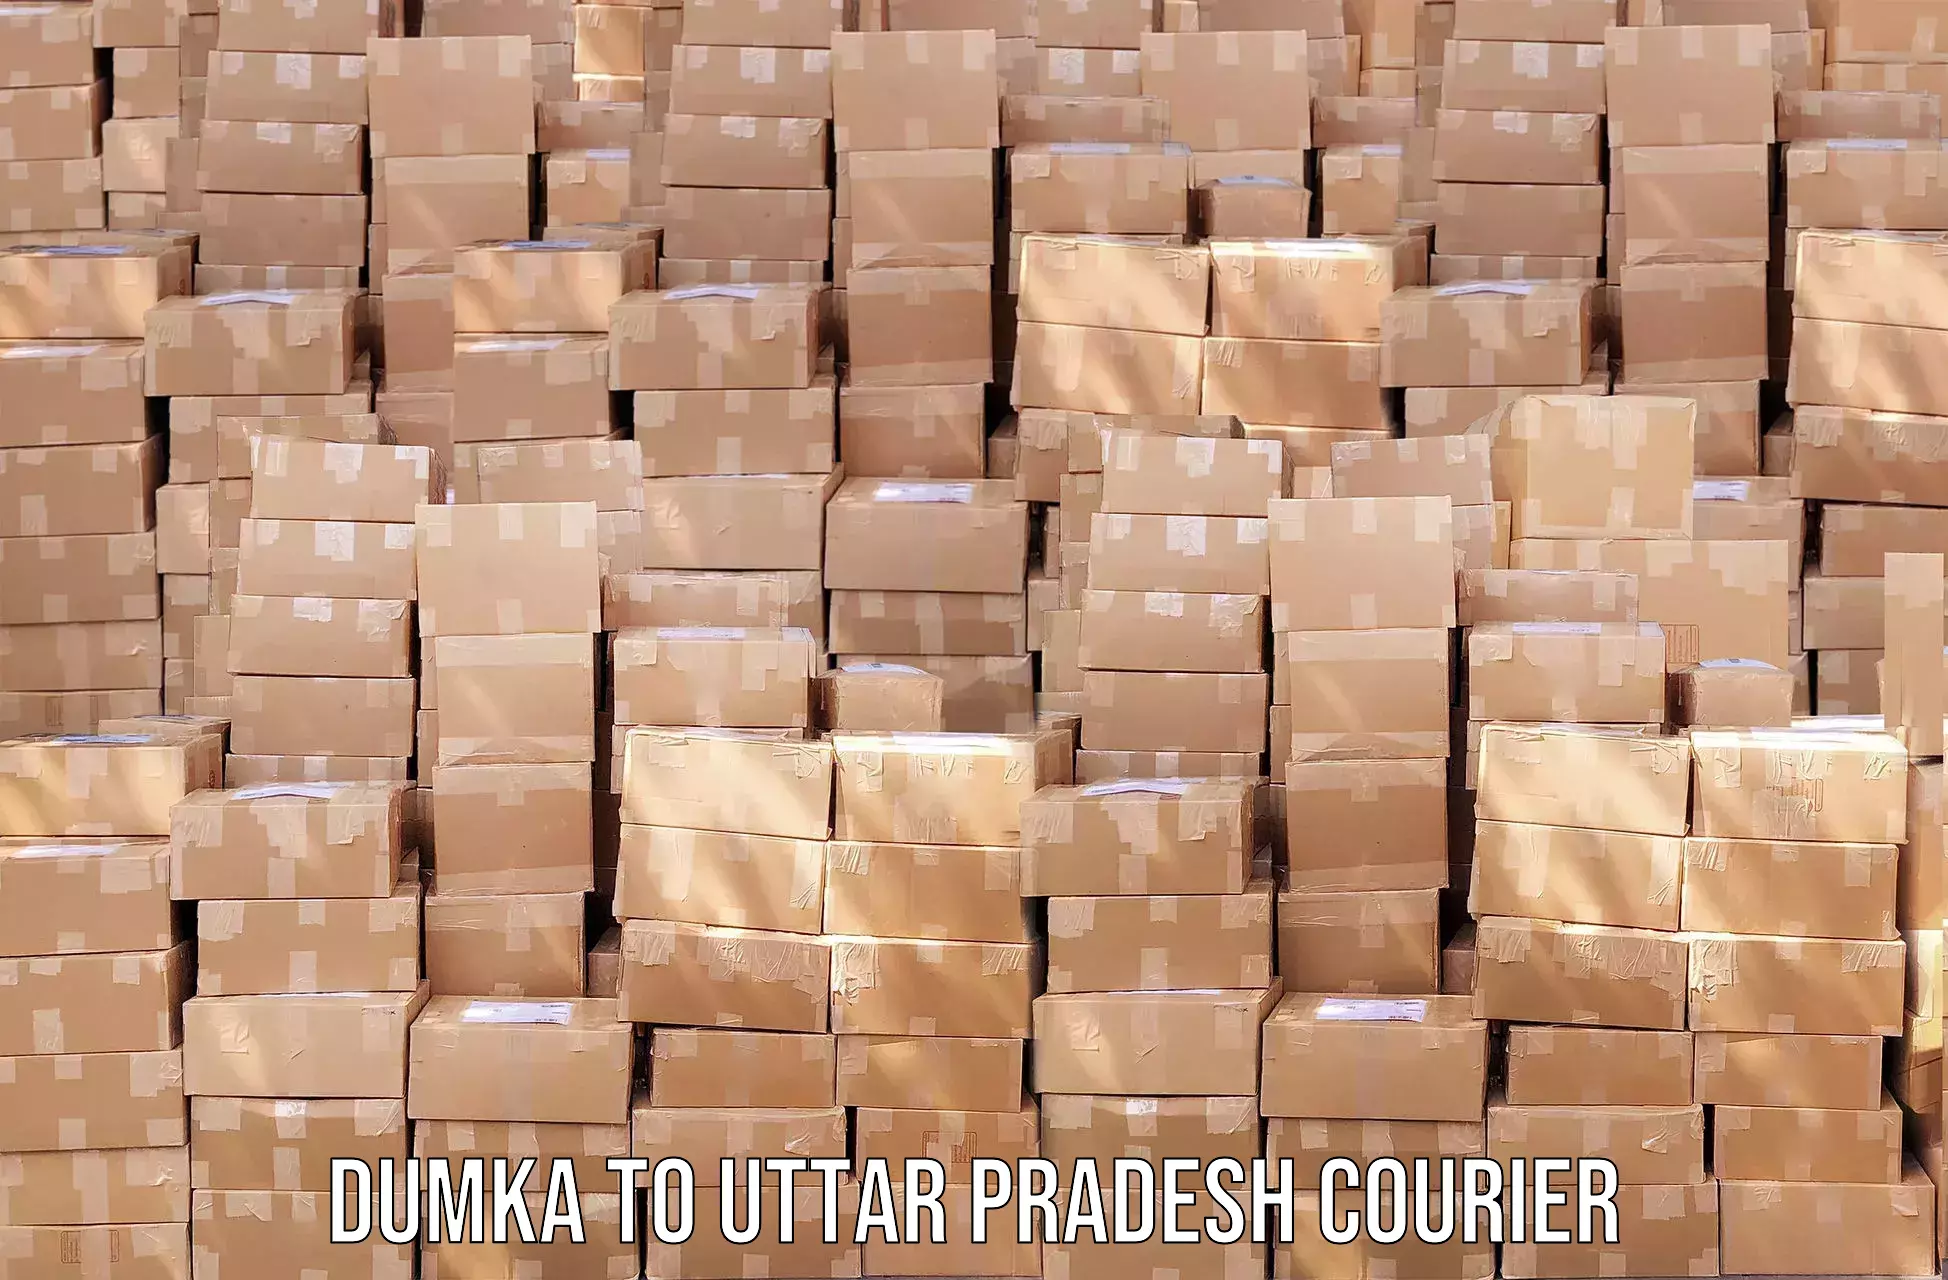 Courier service innovation Dumka to Itava